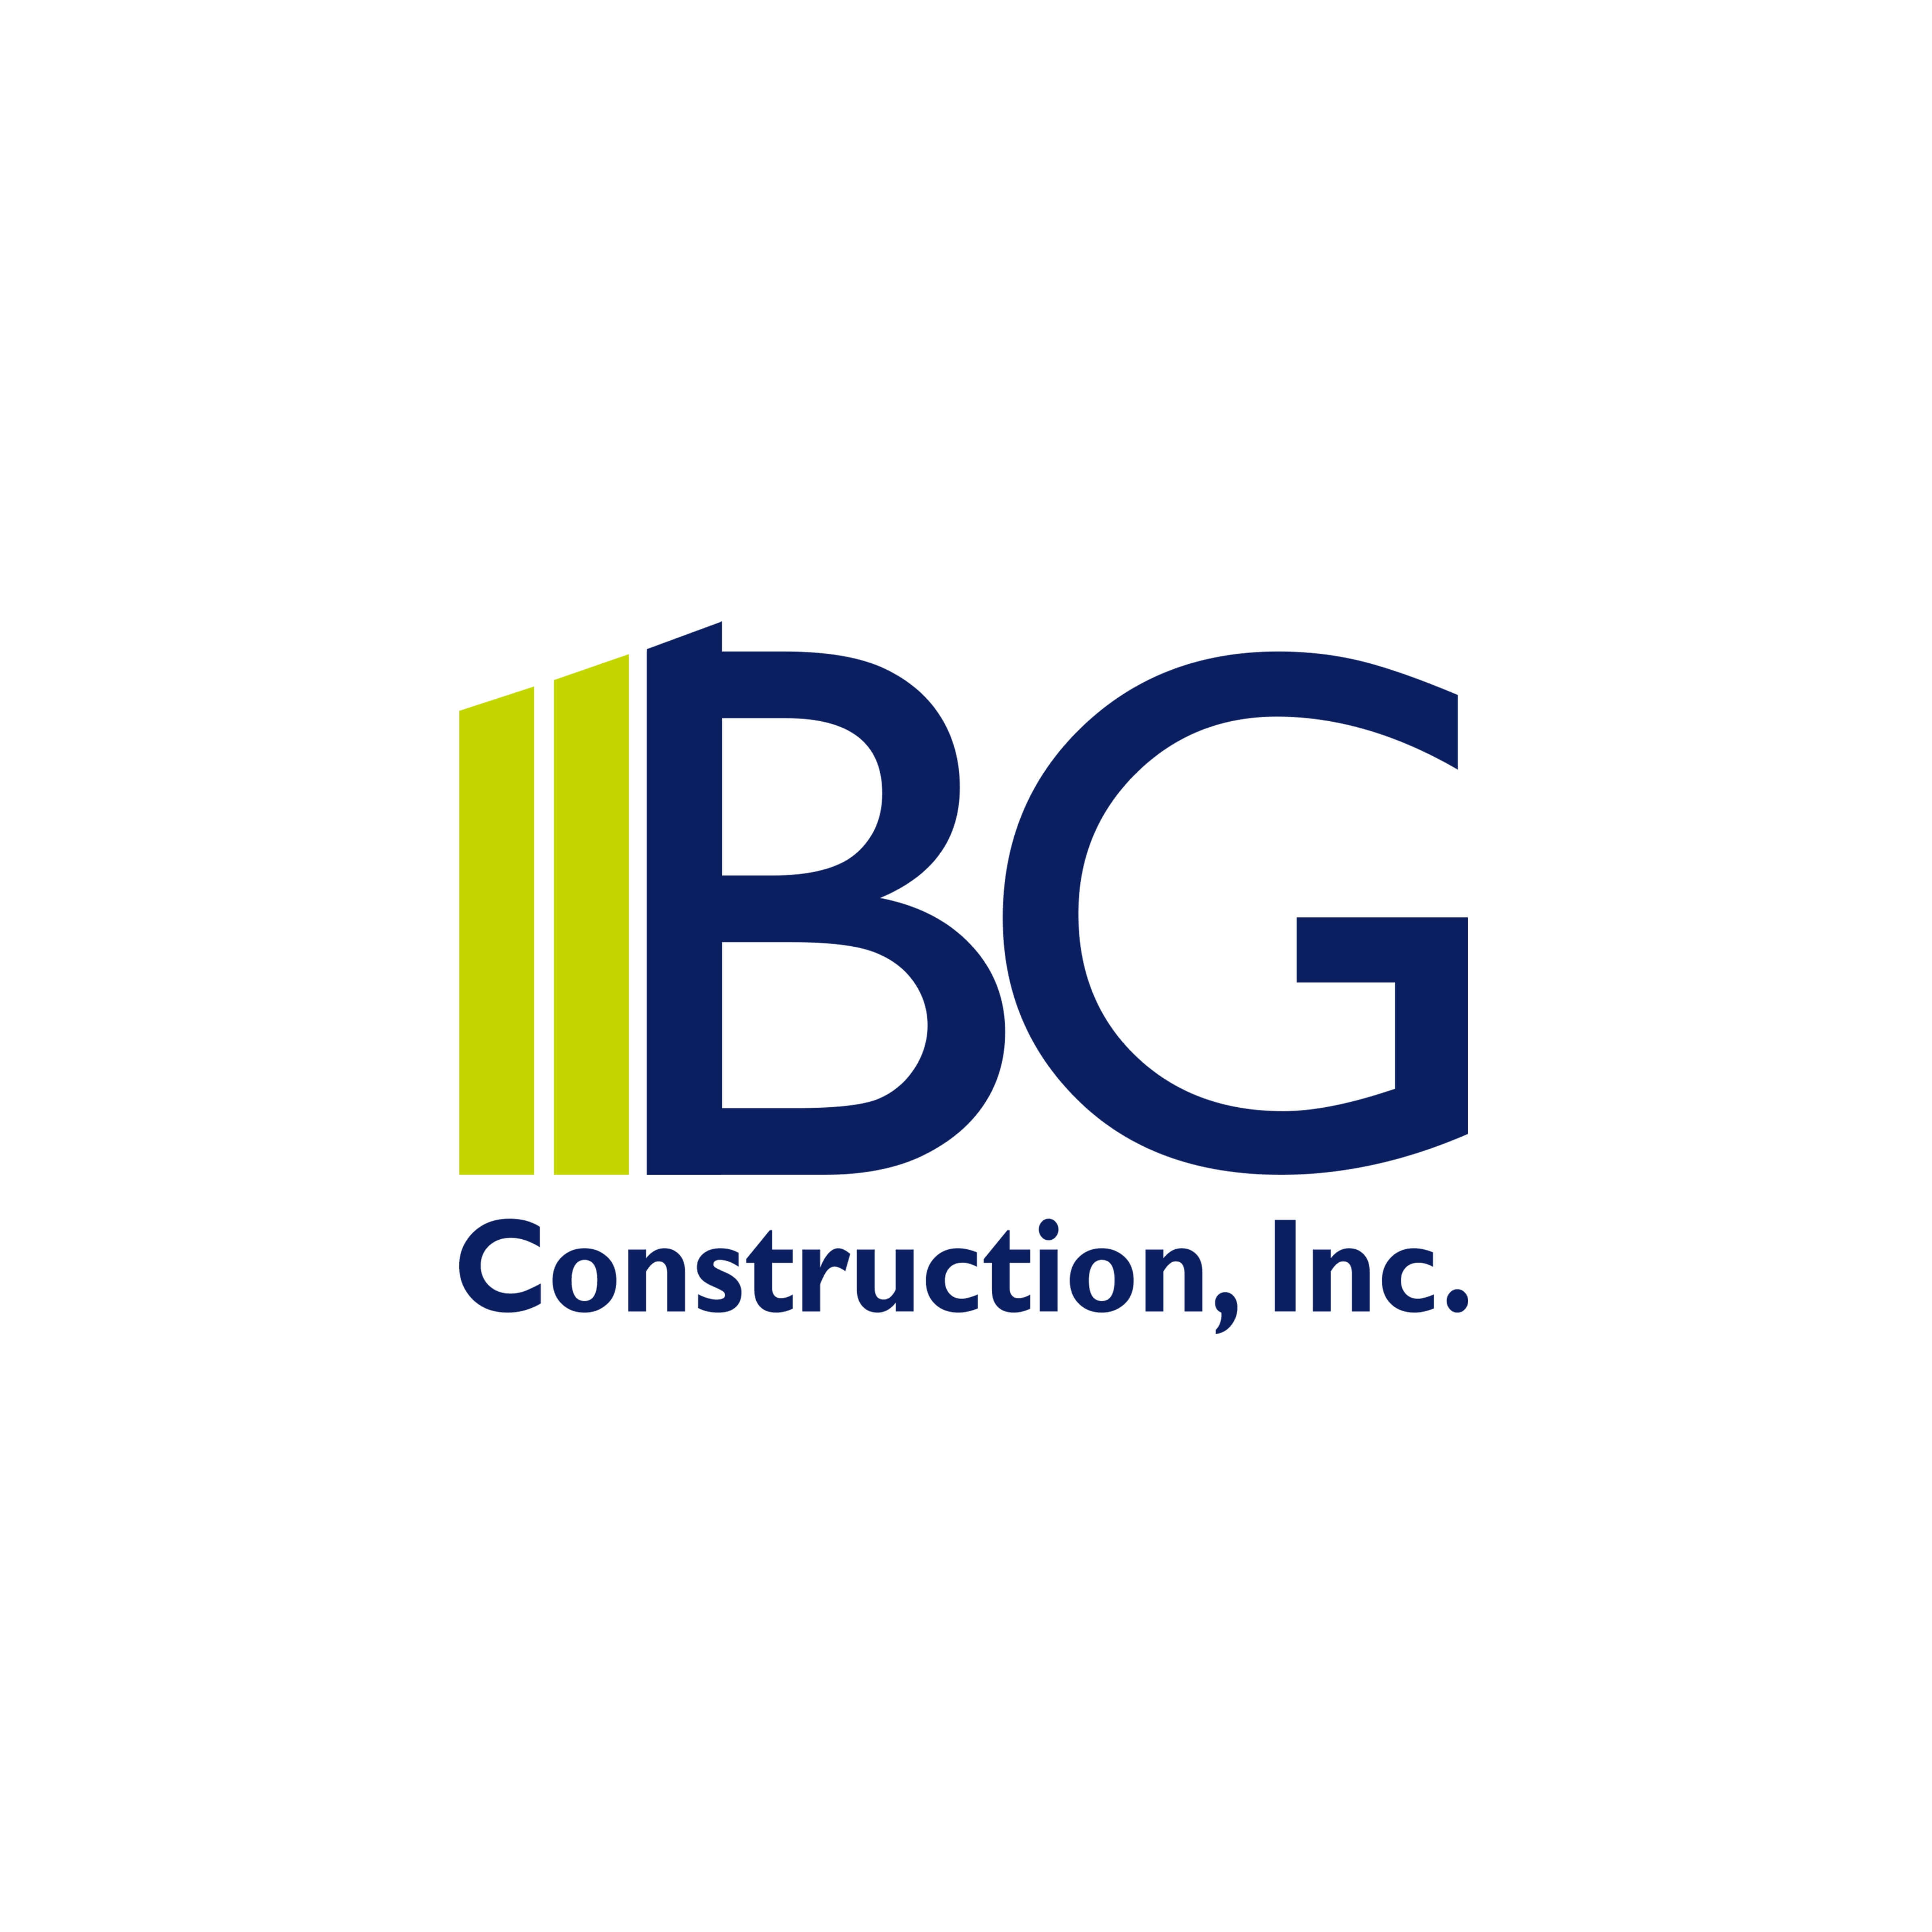 BG Construction